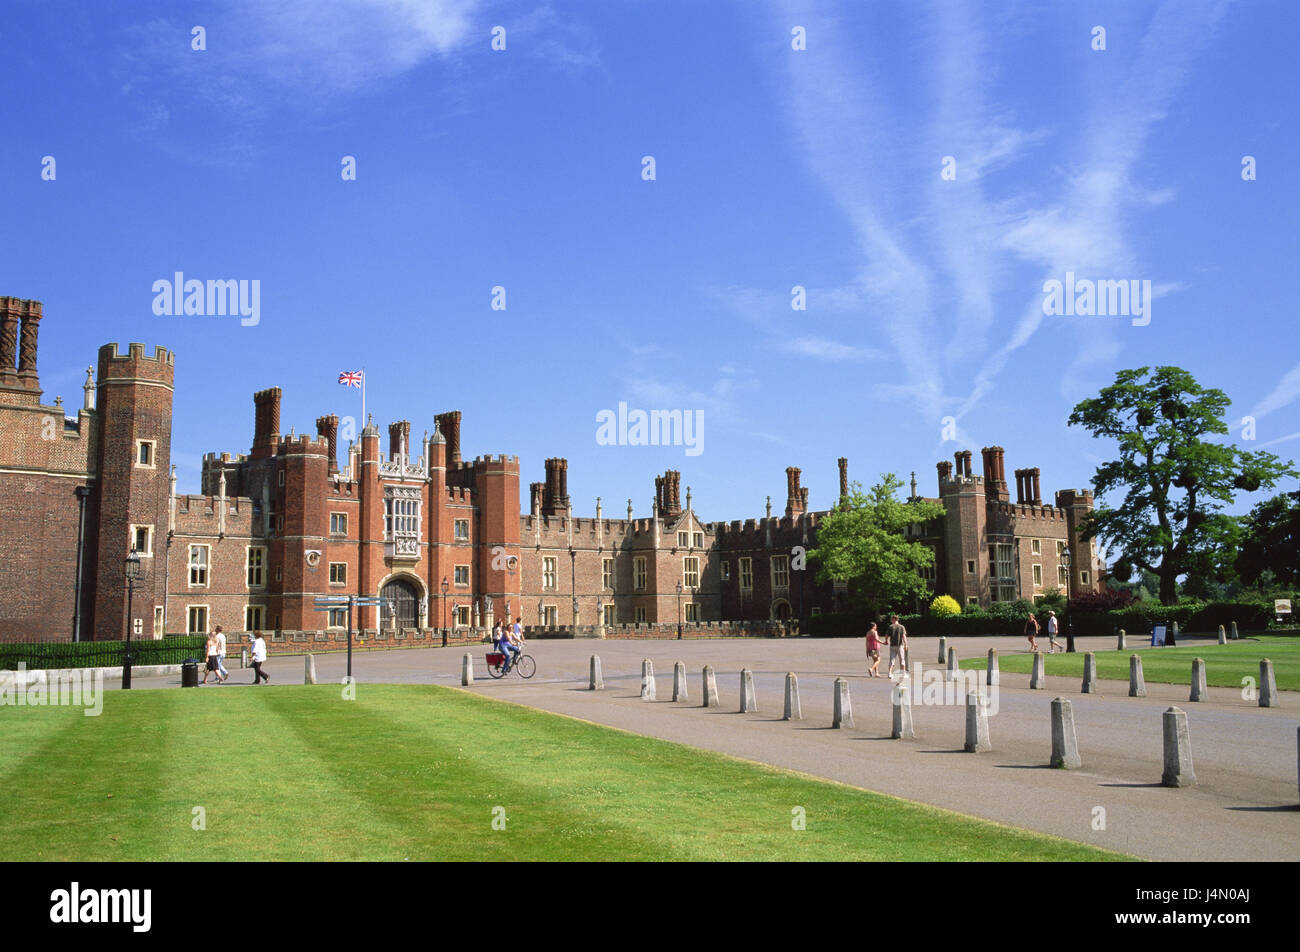 Great Britain, England, London, Hampton Court Palace, tourist, no model release, Stock Photo